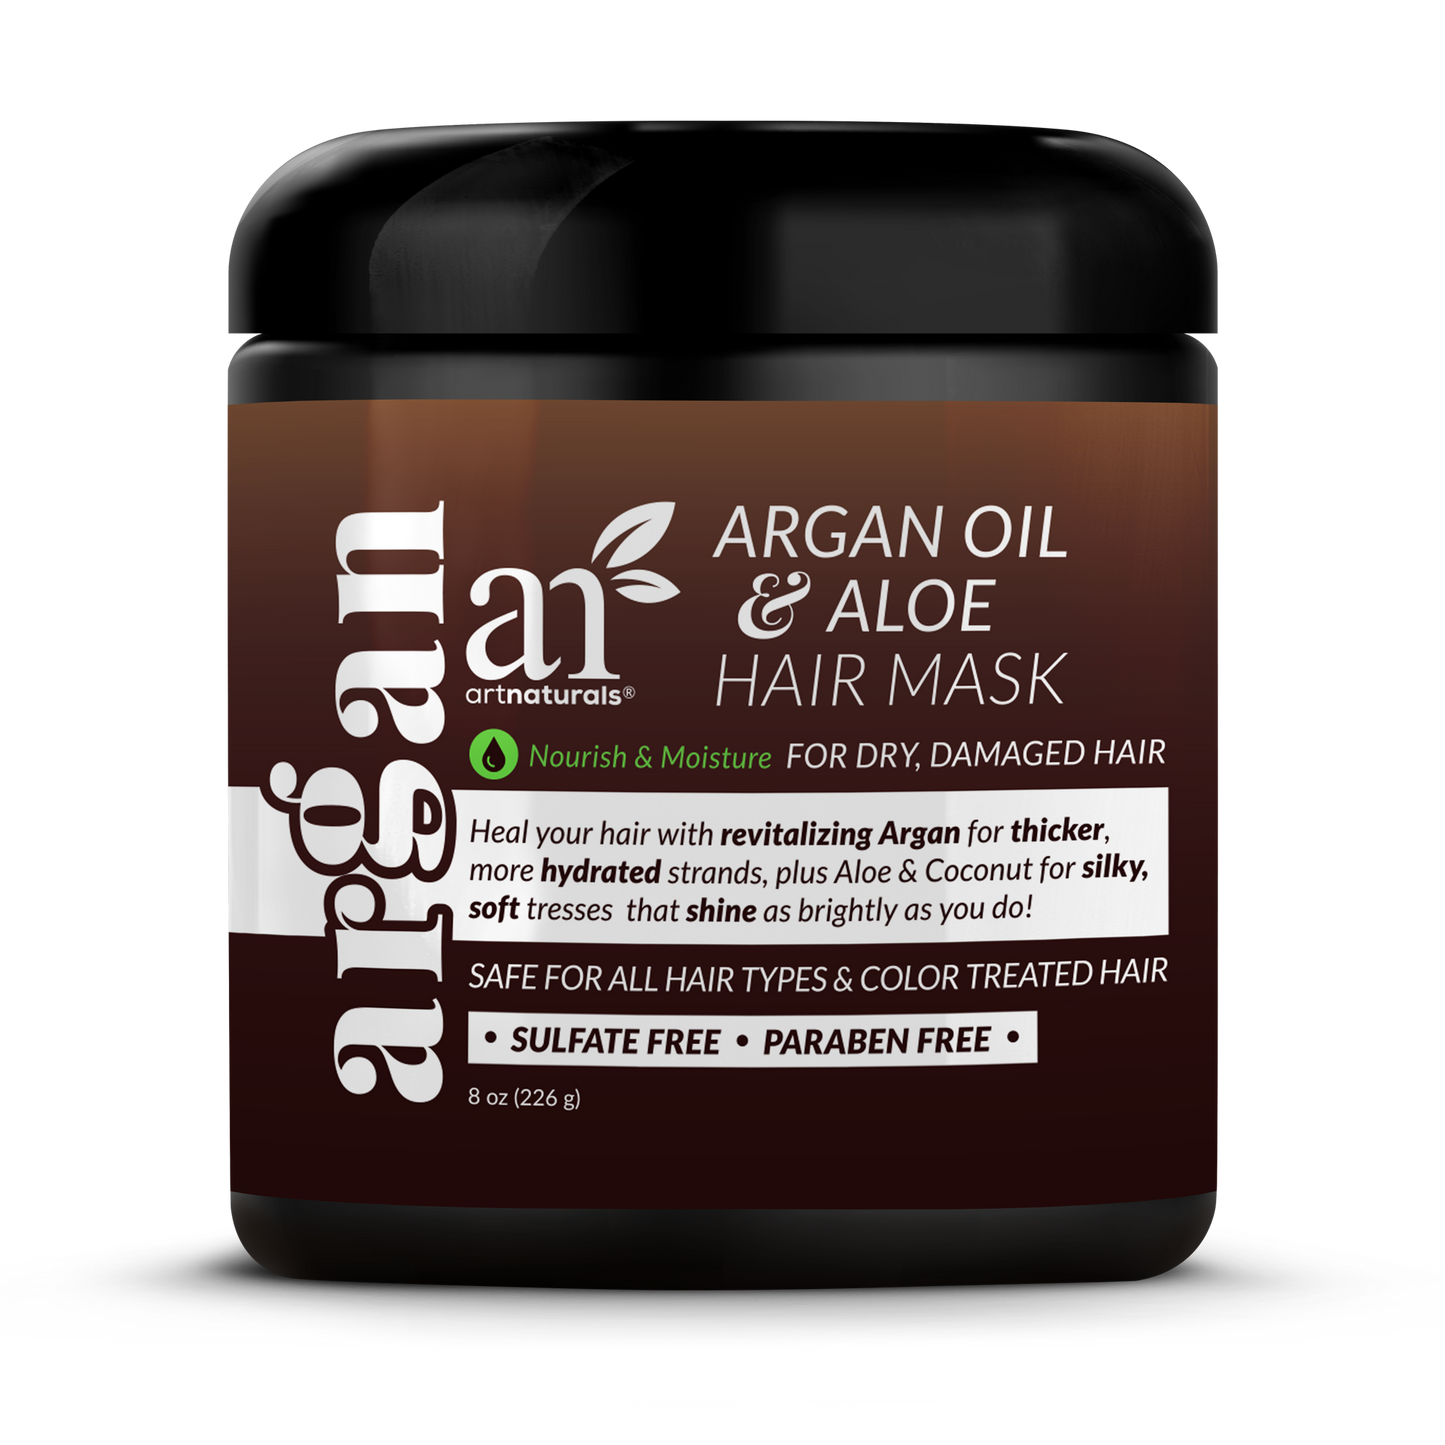 Argan Oil Hair Mask